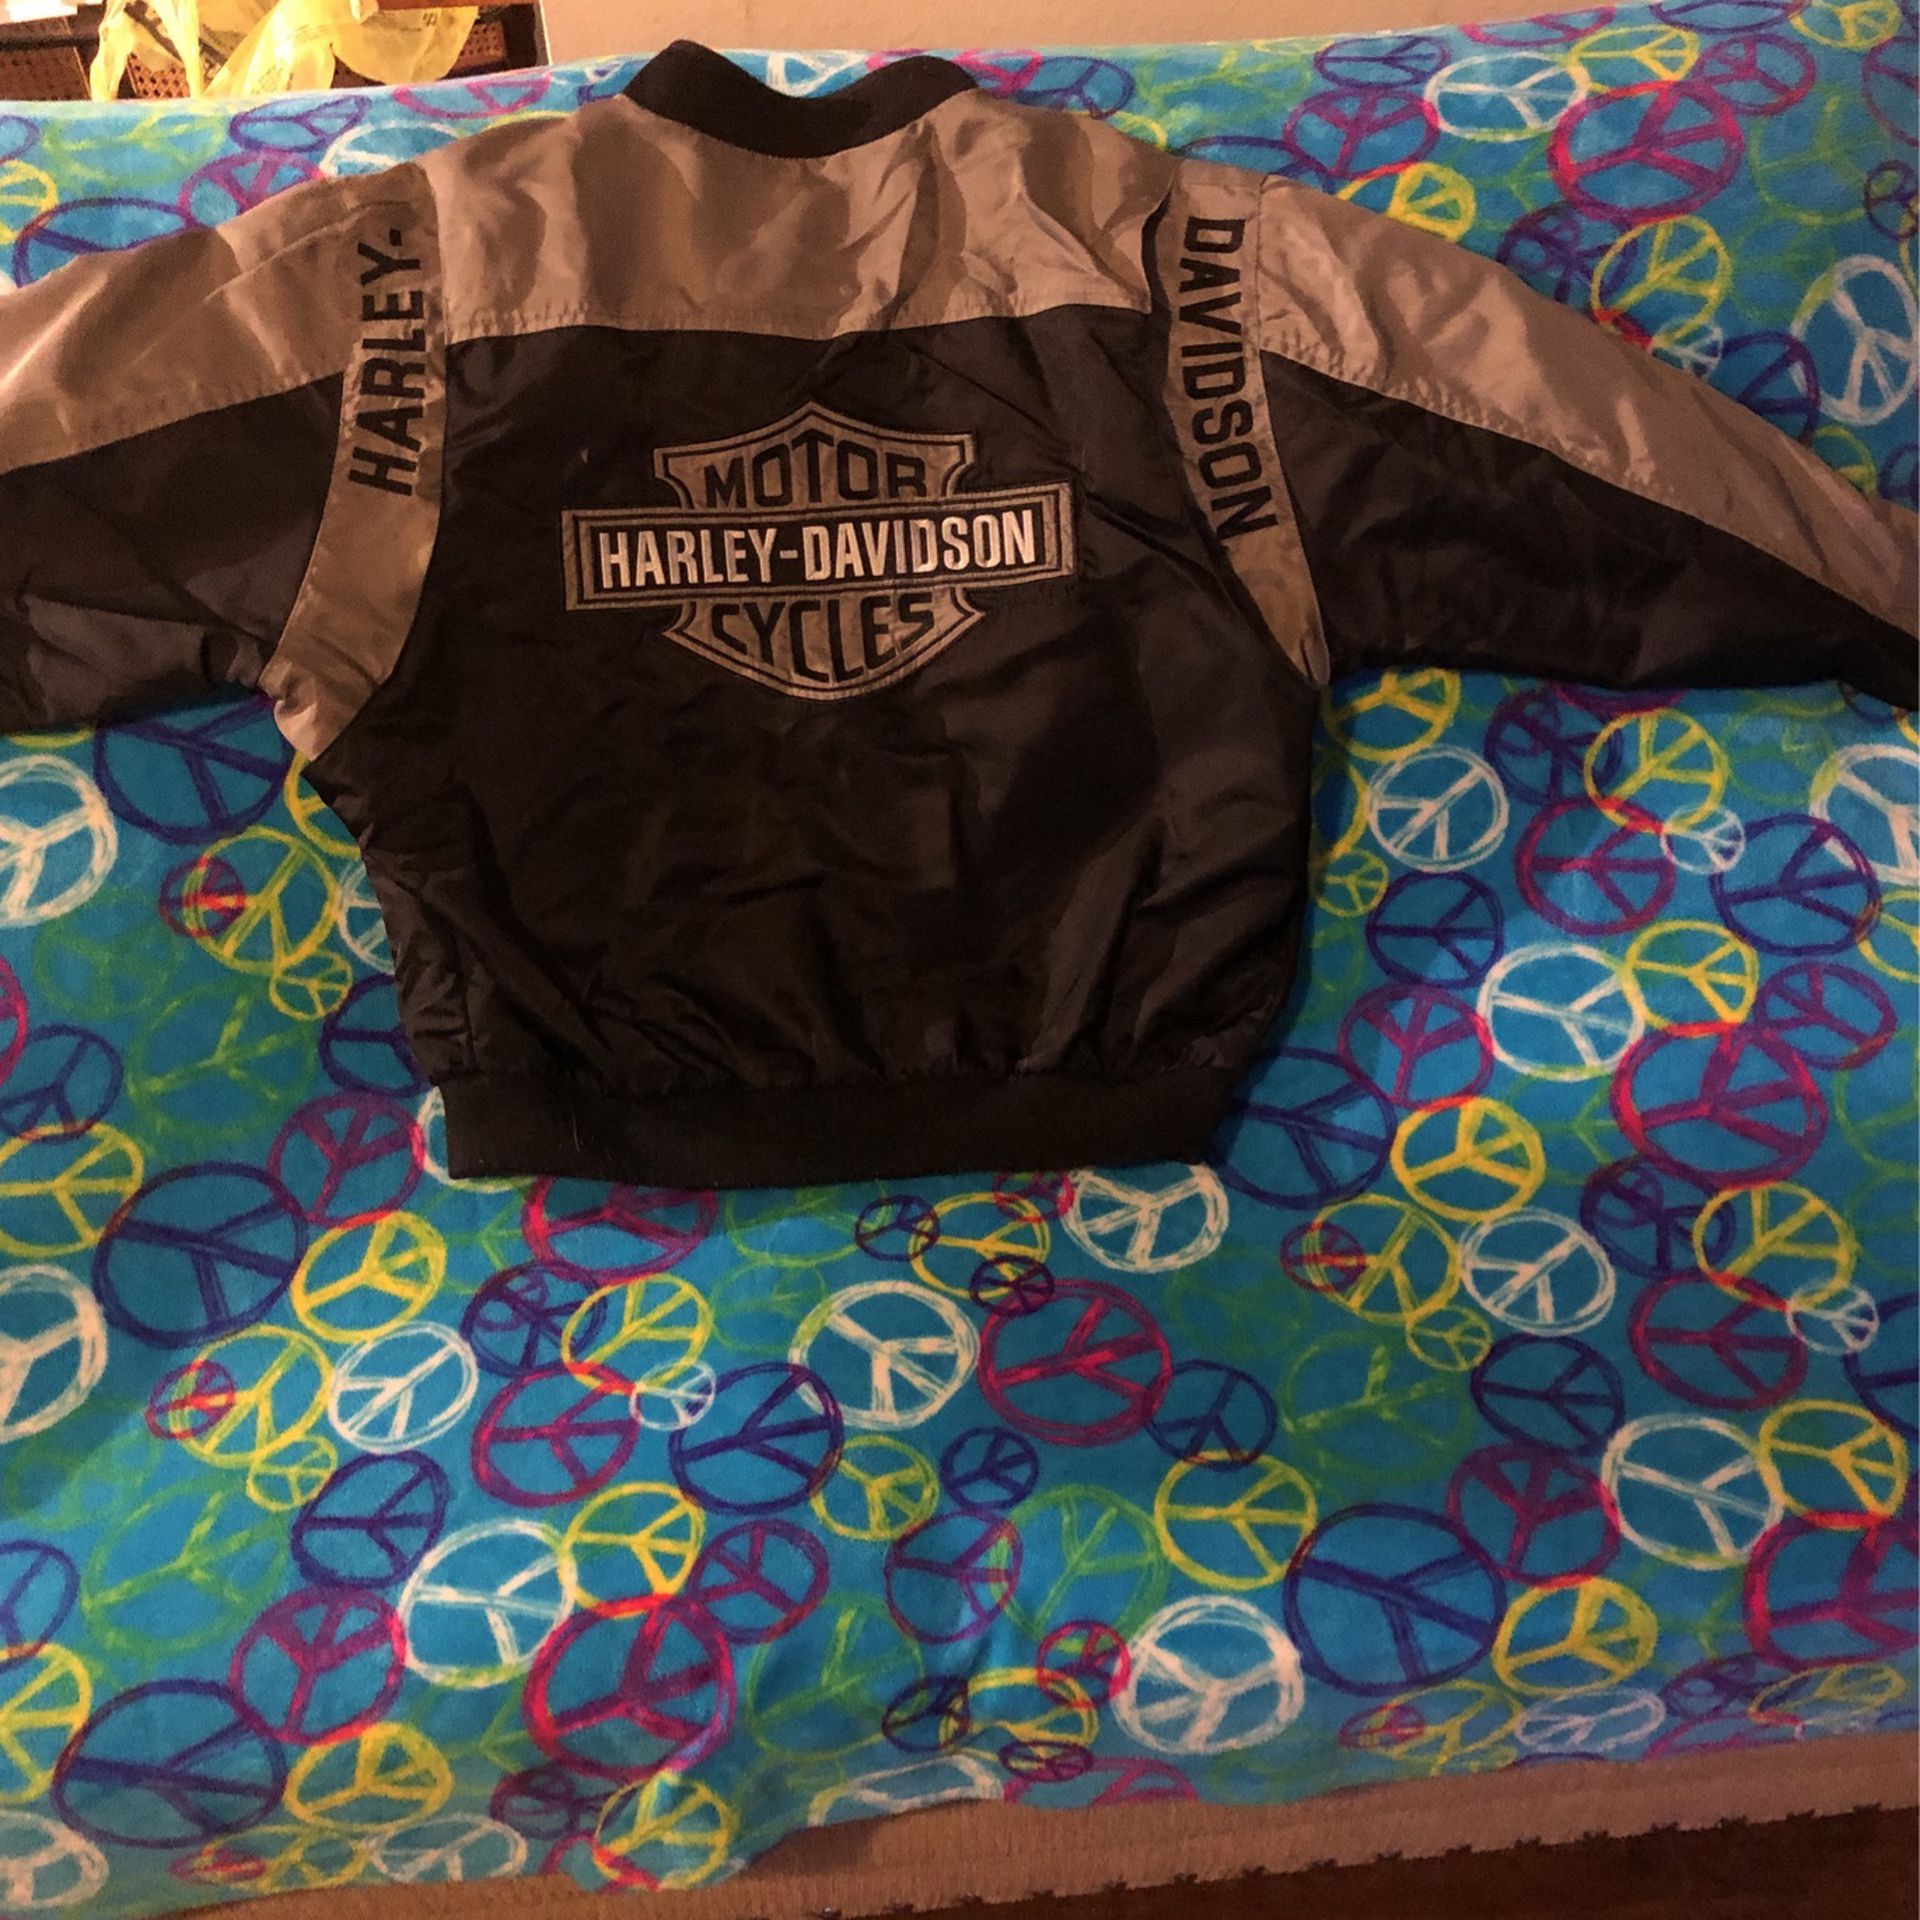 Genuine Harley Davidson Jacket & Shirt Both Xl $40 For Both!